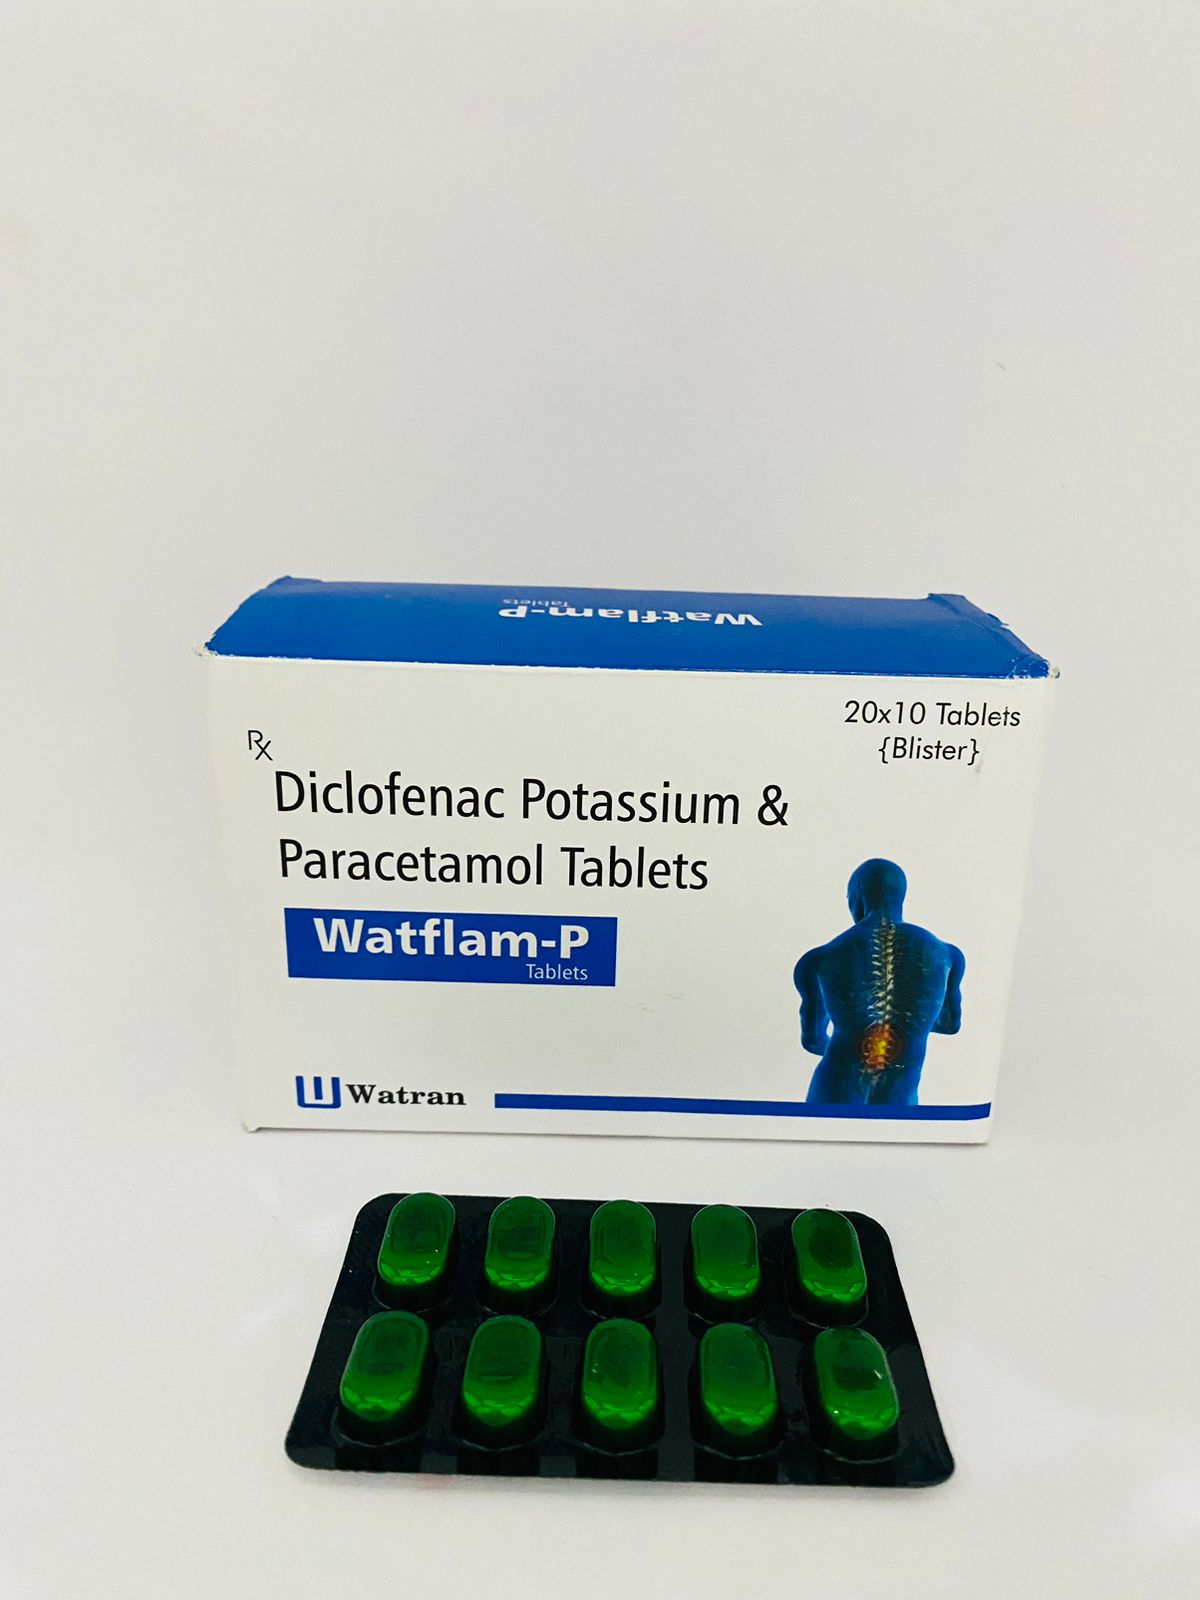 WATFLAM-P